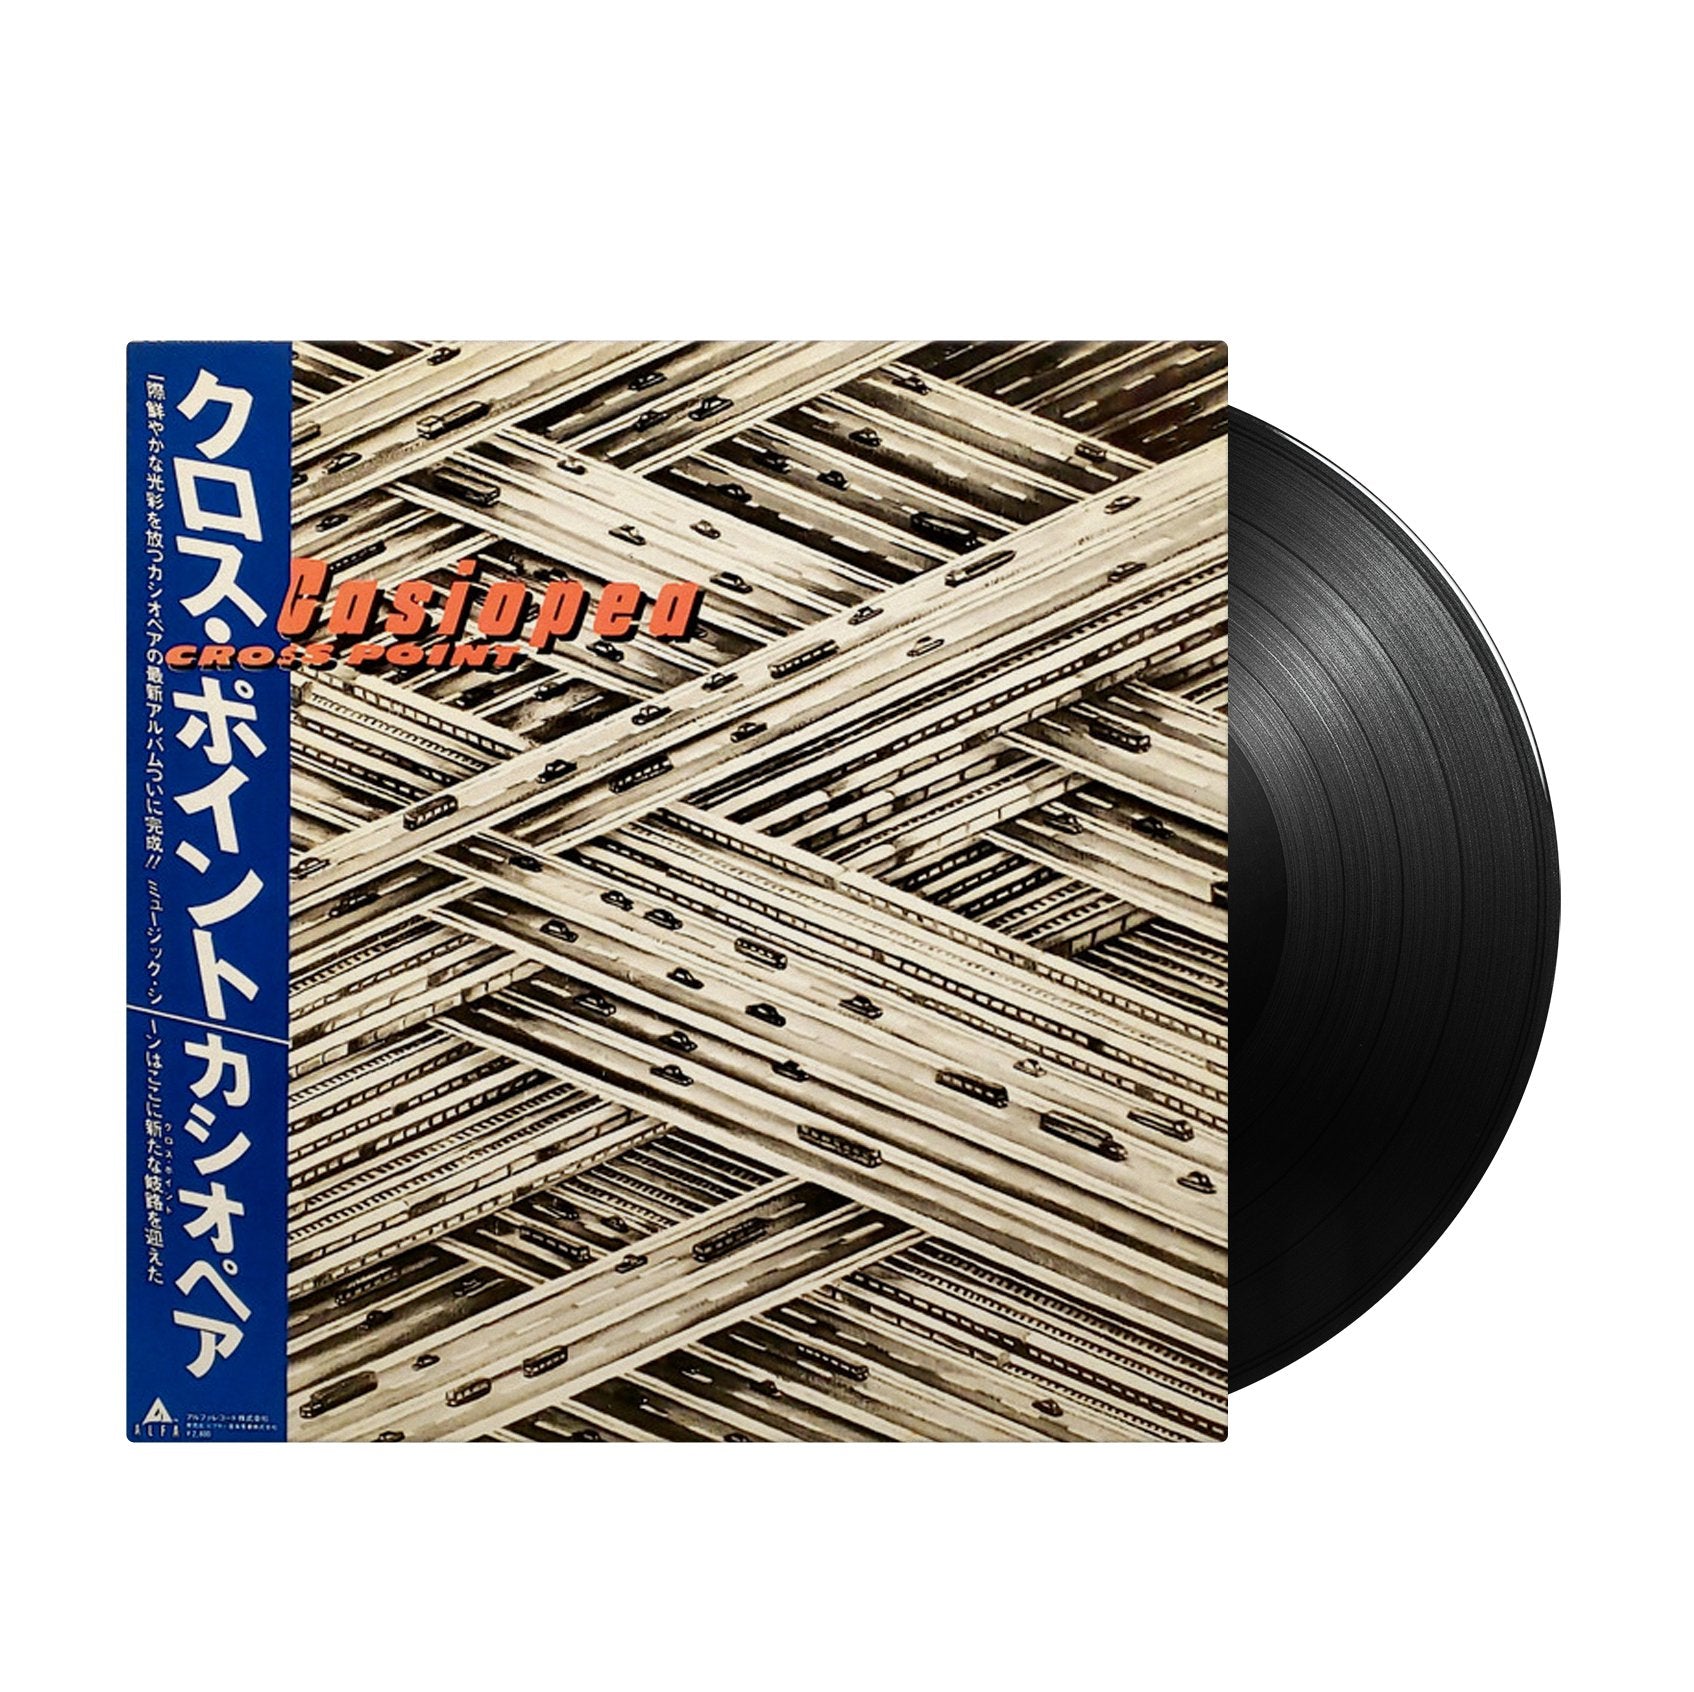 Casiopea - Cross Point (Japan Import) - Inner Ocean Records